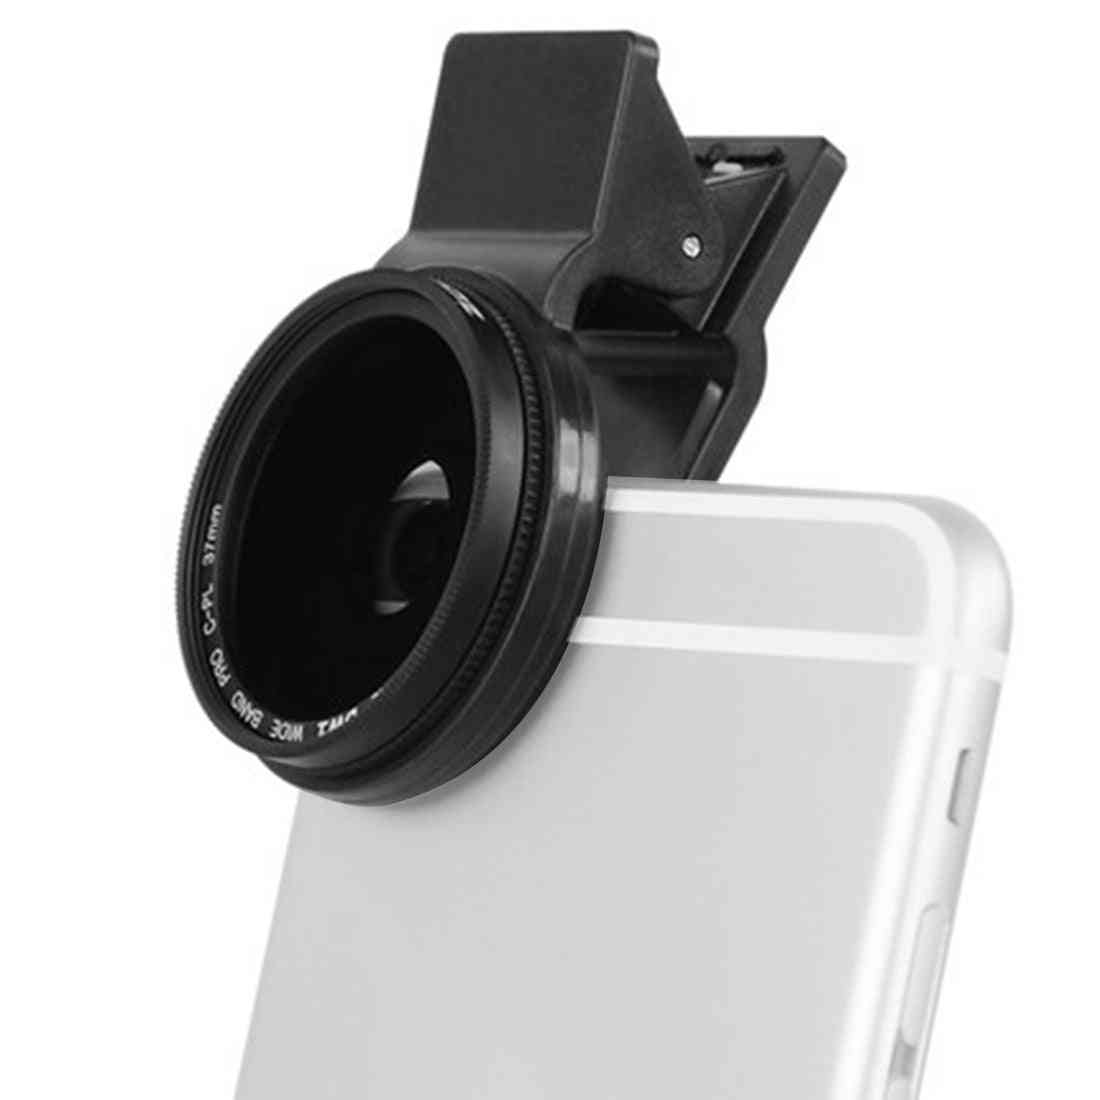 37mm-professionelle Telefon-Kamera Zirkularpolarisator CPL-Objektiv für iPhone 7 6s plus Samsung Galaxy Huawei HTC Windows Android (37mm)